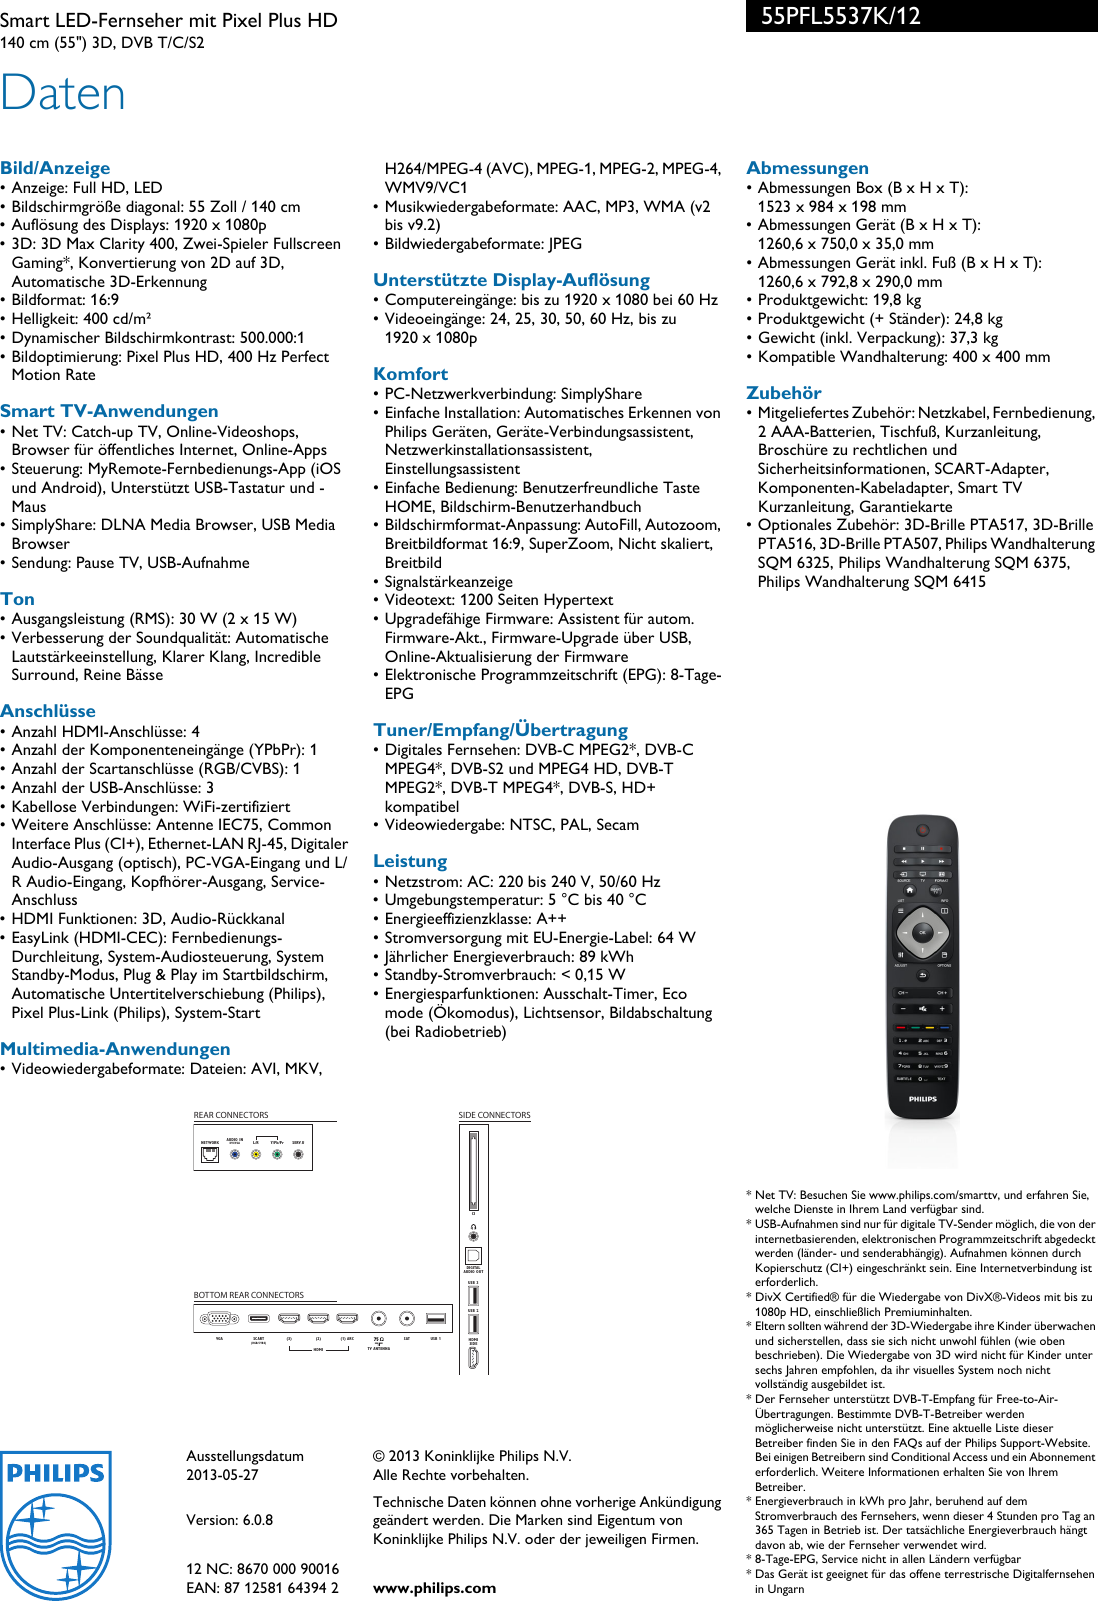 Page 3 of 3 - Philips 55PFL5537K/12 Leaflet 55PFL5537K_12 Released Switzerland (German)  User Manual Datenblatt 55pfl5537k 12 Pss Deuch